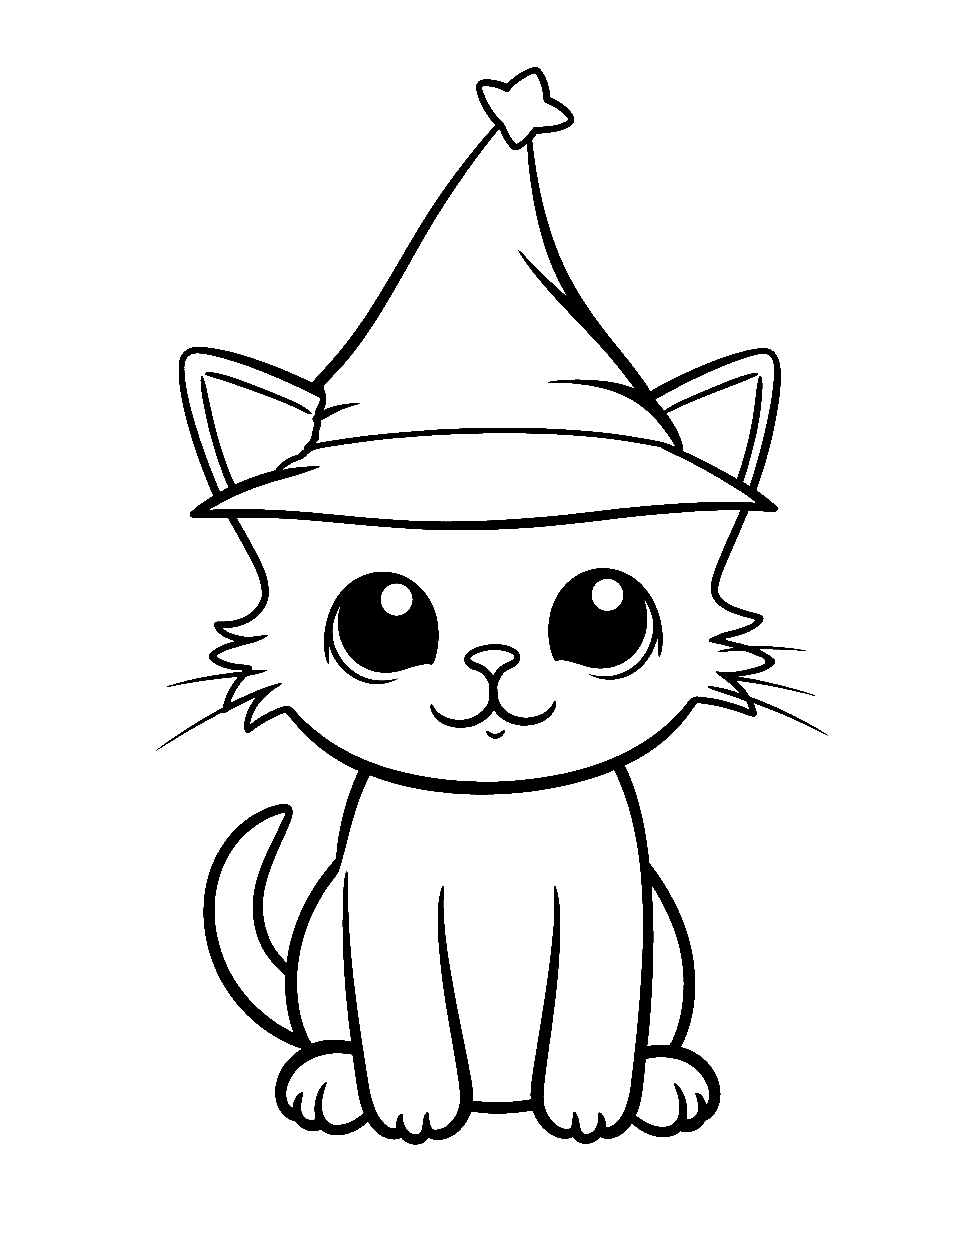 Kitten's Halloween Hat Kitten Coloring Page - A kitten wearing a cute witch’s hat, ready for Halloween.